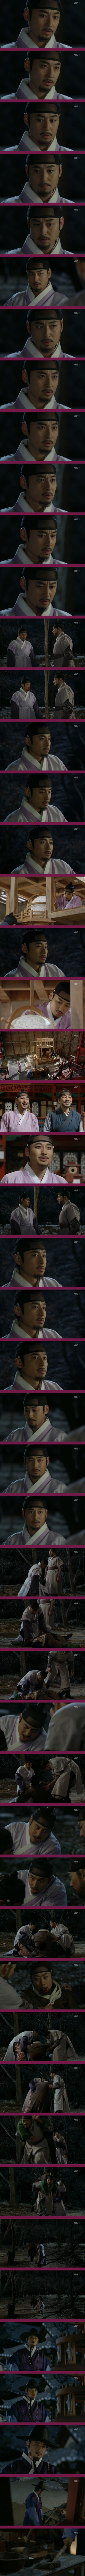 episodes 18 and 19 captures for the Korean drama 'Jang Yeong-sil - Drama'